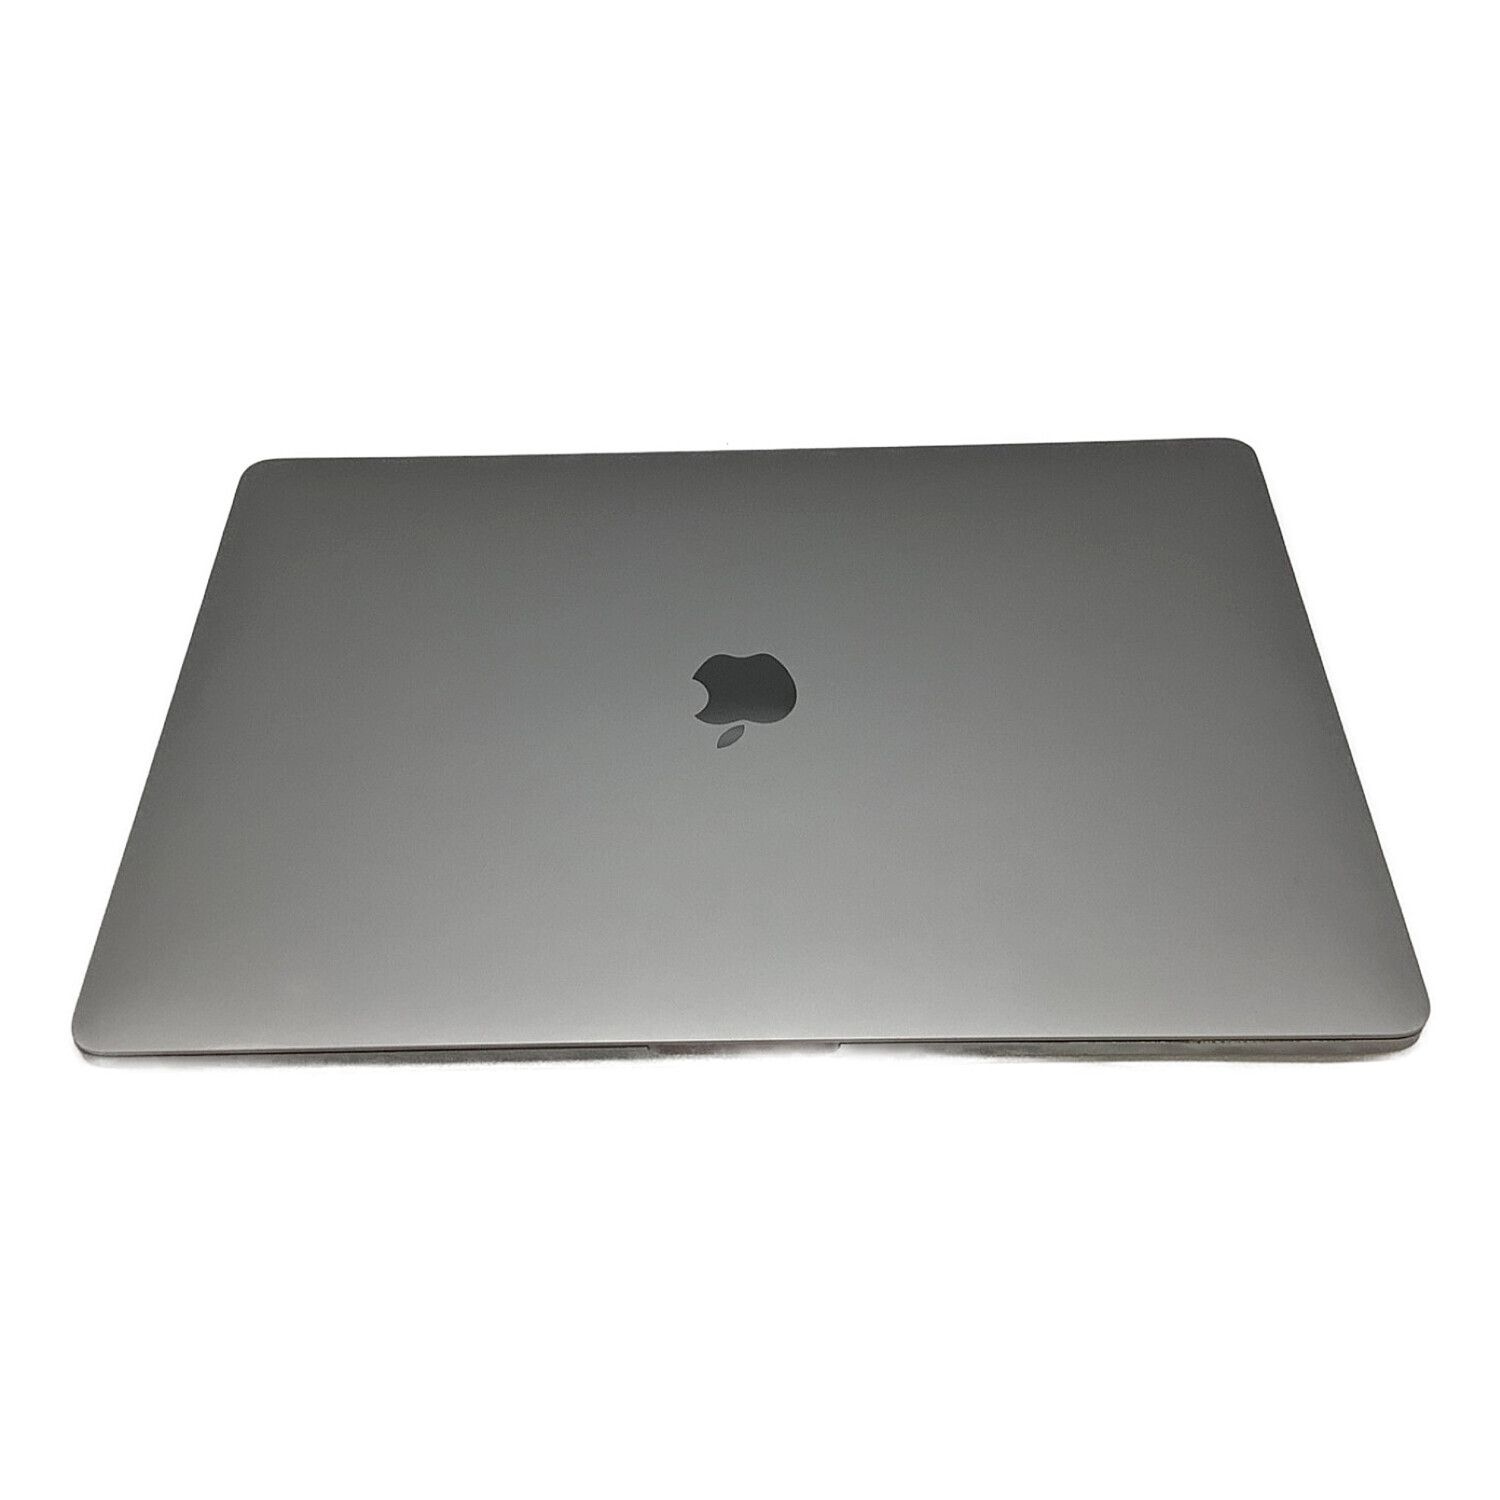 Apple (アップル) MacBook Pro A1990 15インチ Mac OS 2.4GHz 8コア 